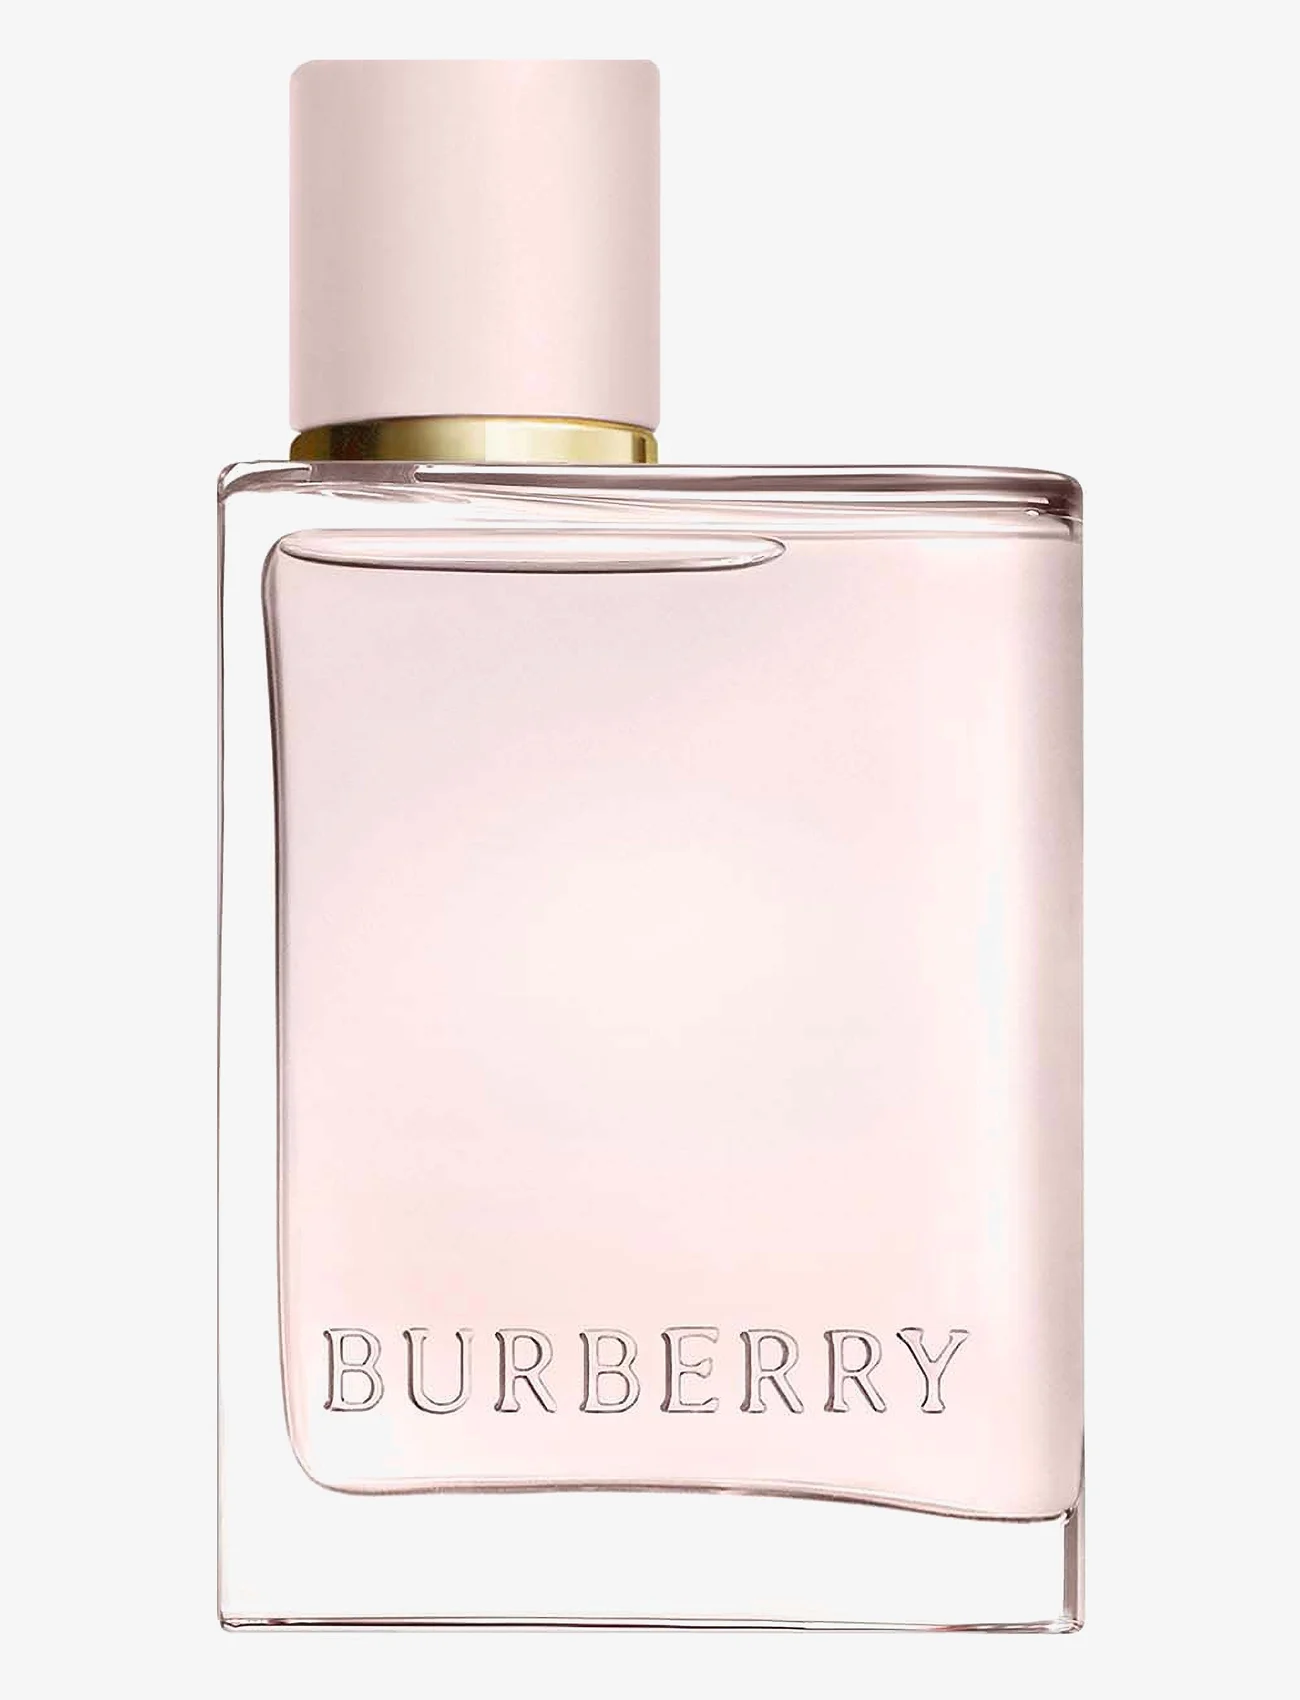 Burberry - HER EAU DE PARFUM - eau de parfum - no color - 1